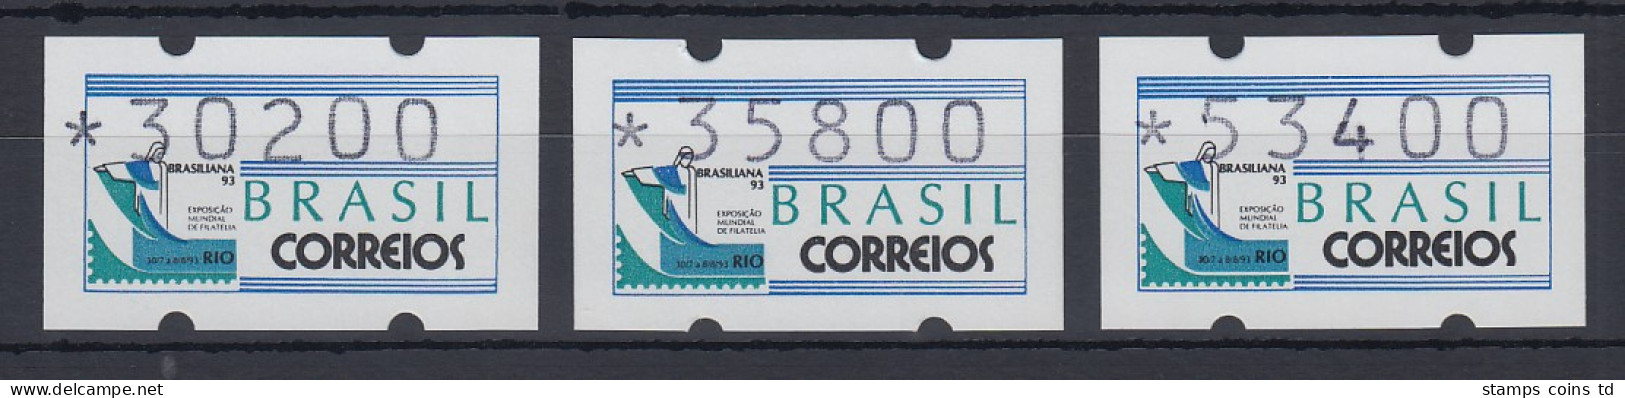 Brasilien Klüssendorf-ATM 1993 BRASILIANA Mi-Nr 5 Satz 30200 - 35800 - 53400 ** - Franking Labels